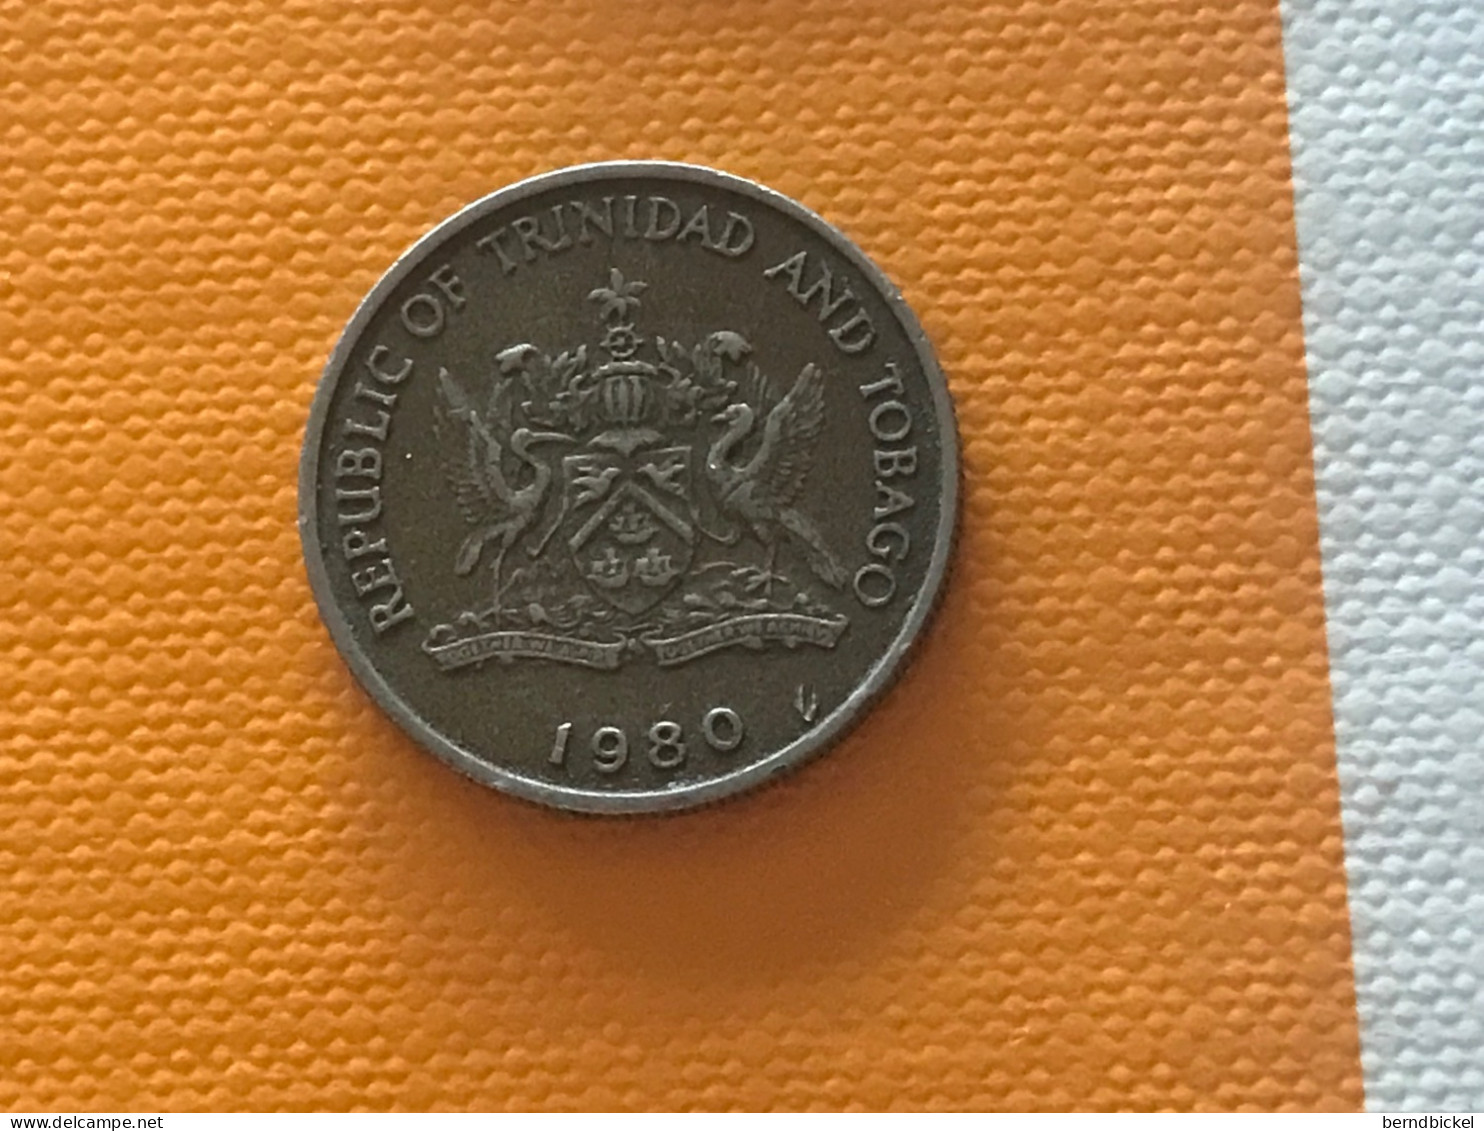 Münze Münzen Umlaufmünze Trinidad & Tobago 25 Cents 1980 - Trinité & Tobago